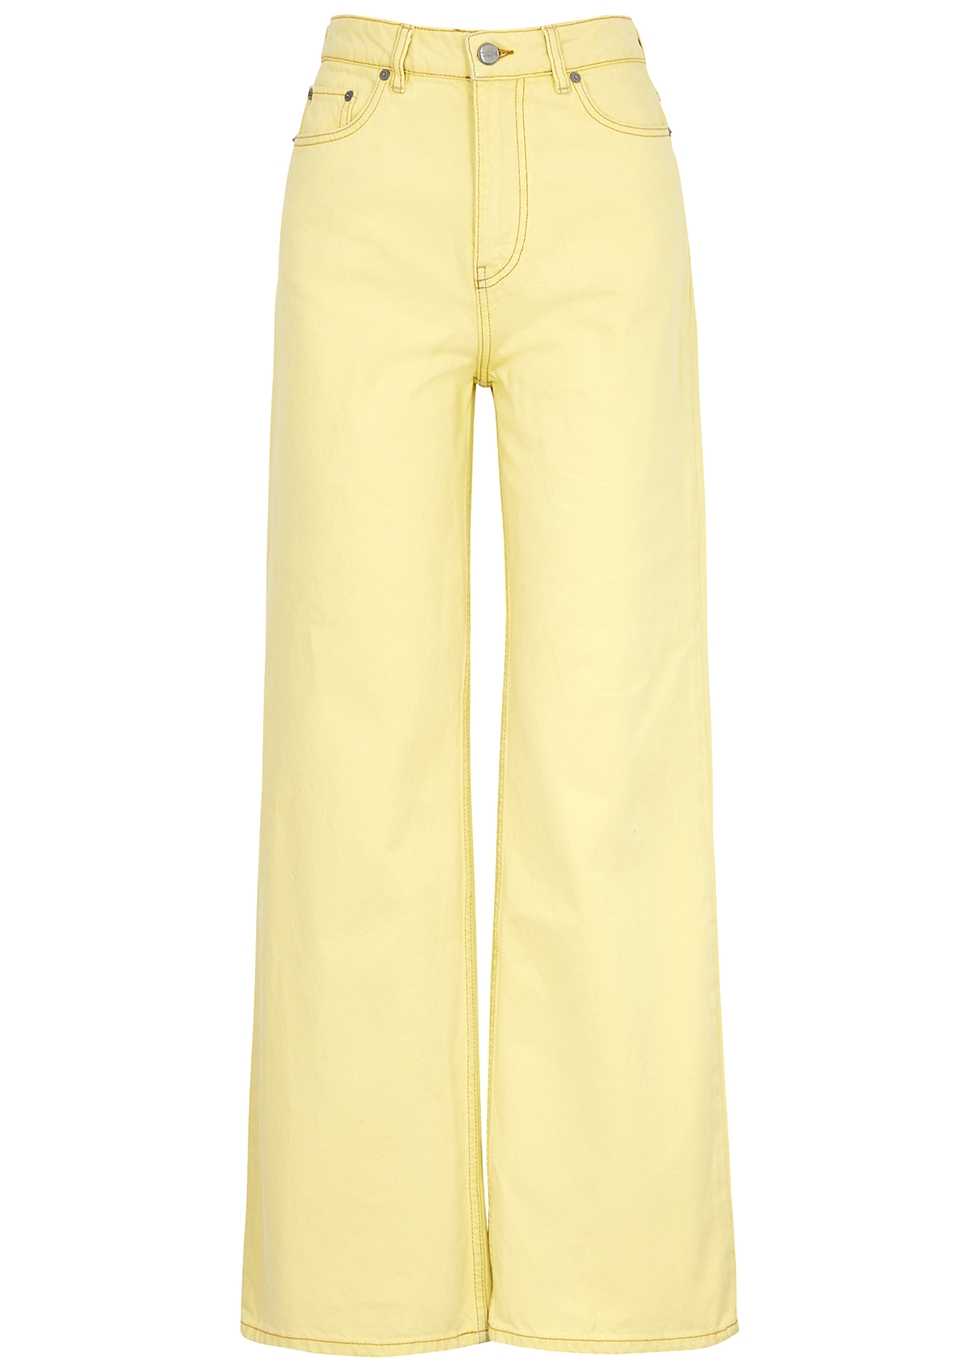 Ganni Magny yellow wide-leg jeans